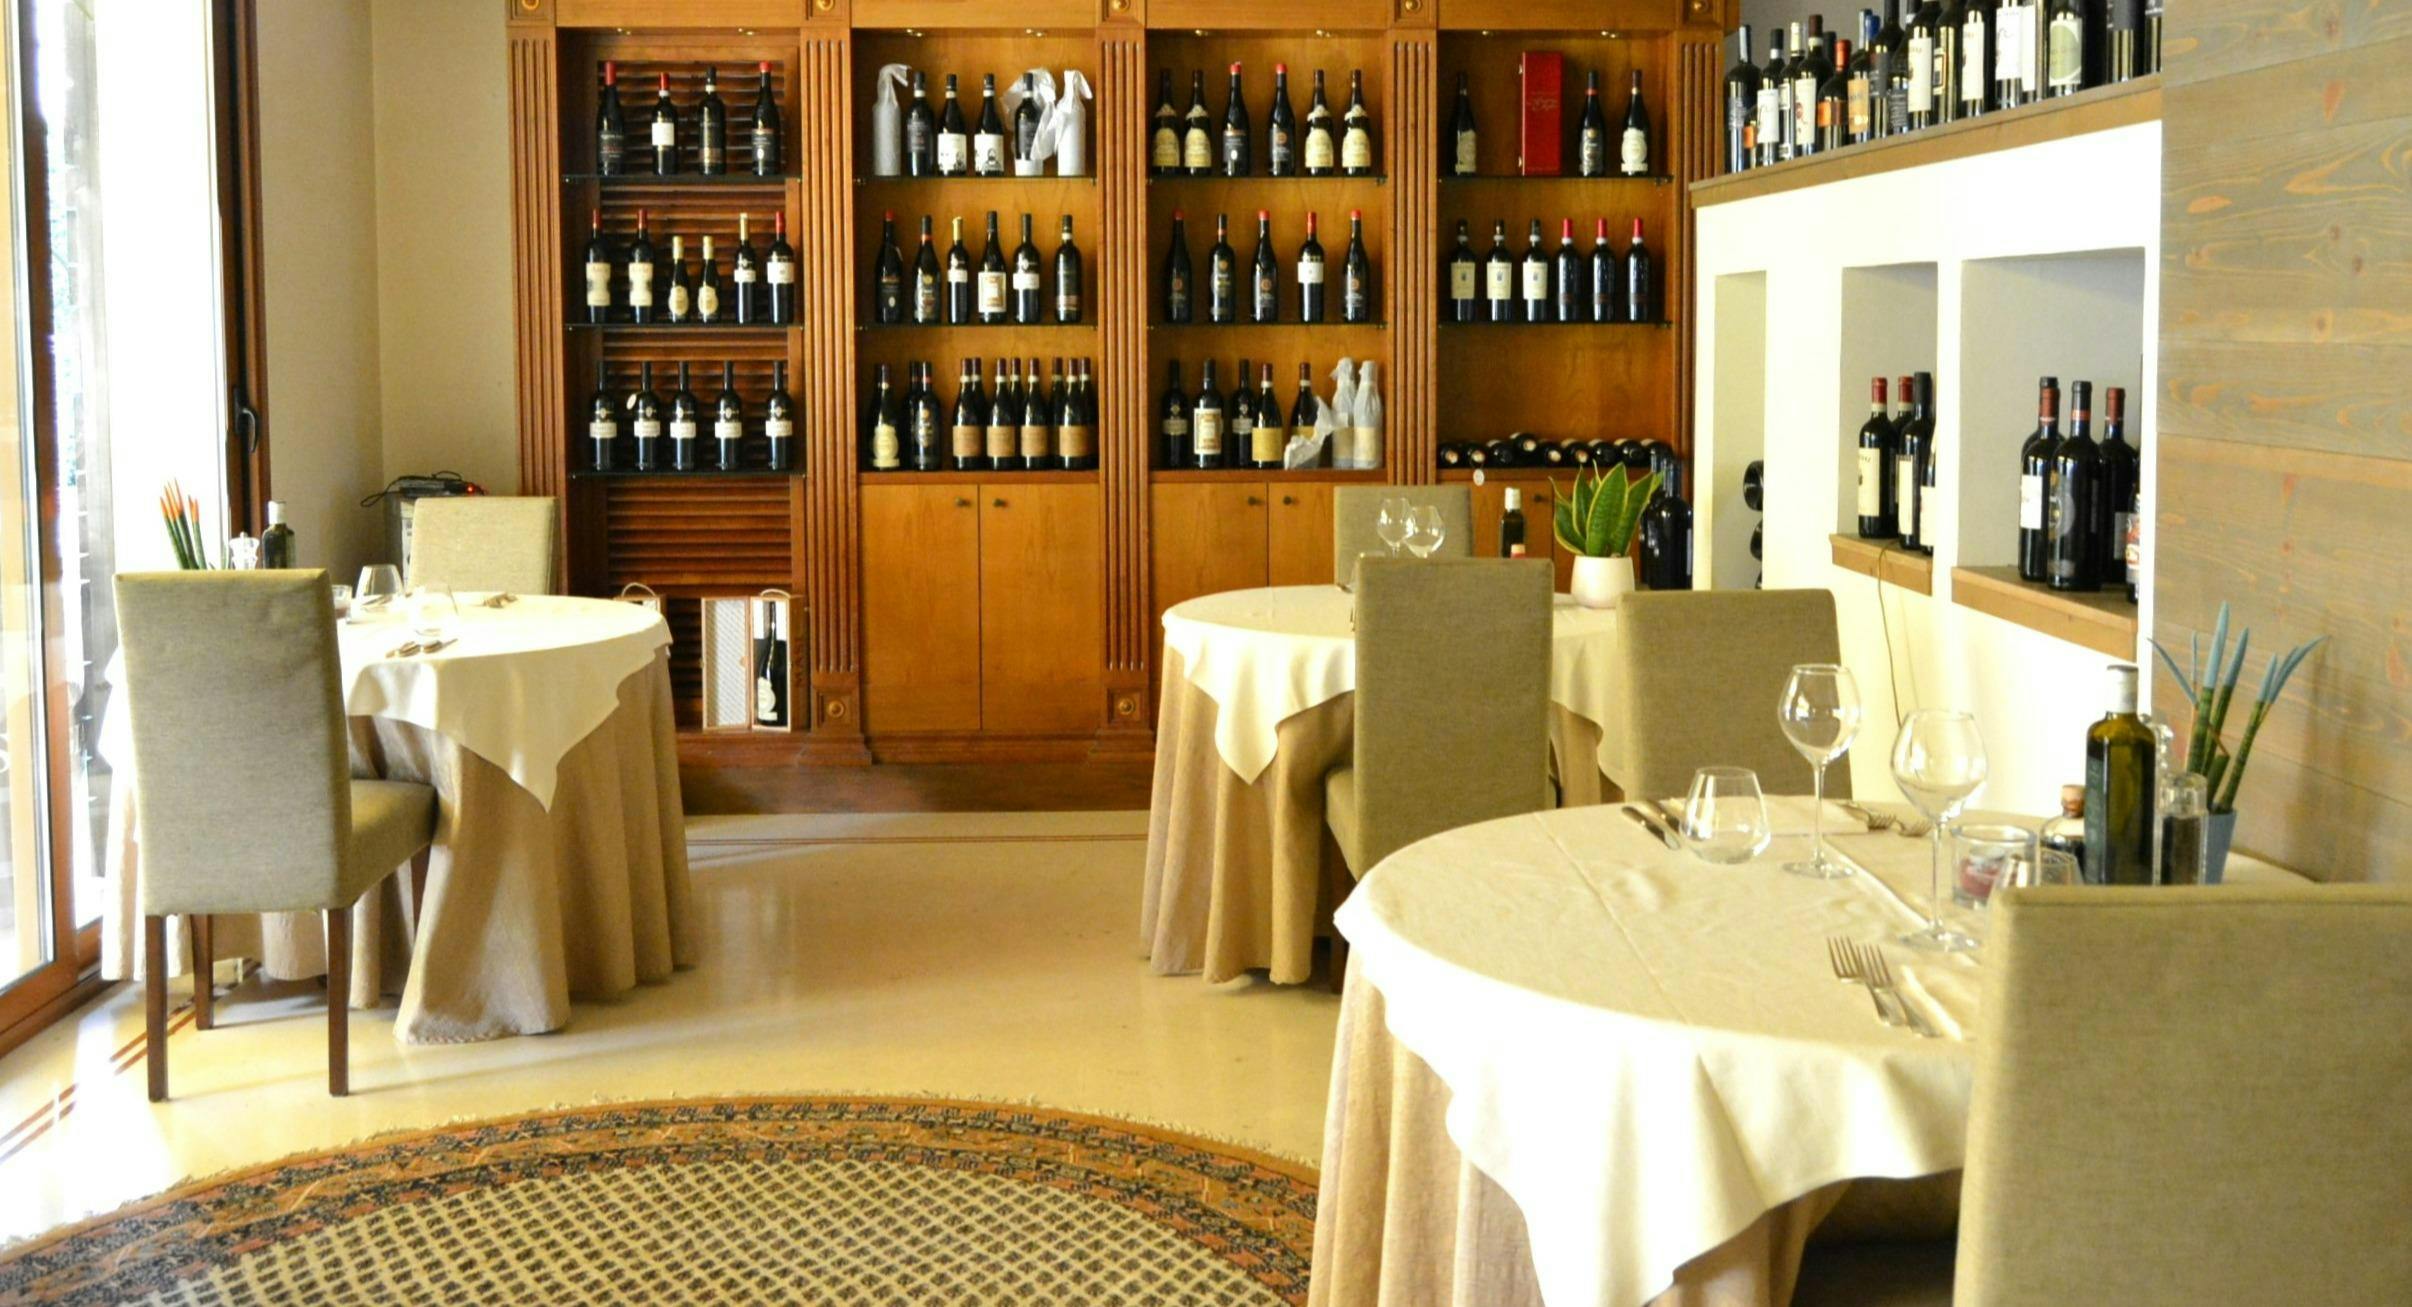 Photo of restaurant Ristorante Corte Sconta in Torreglia, Padua